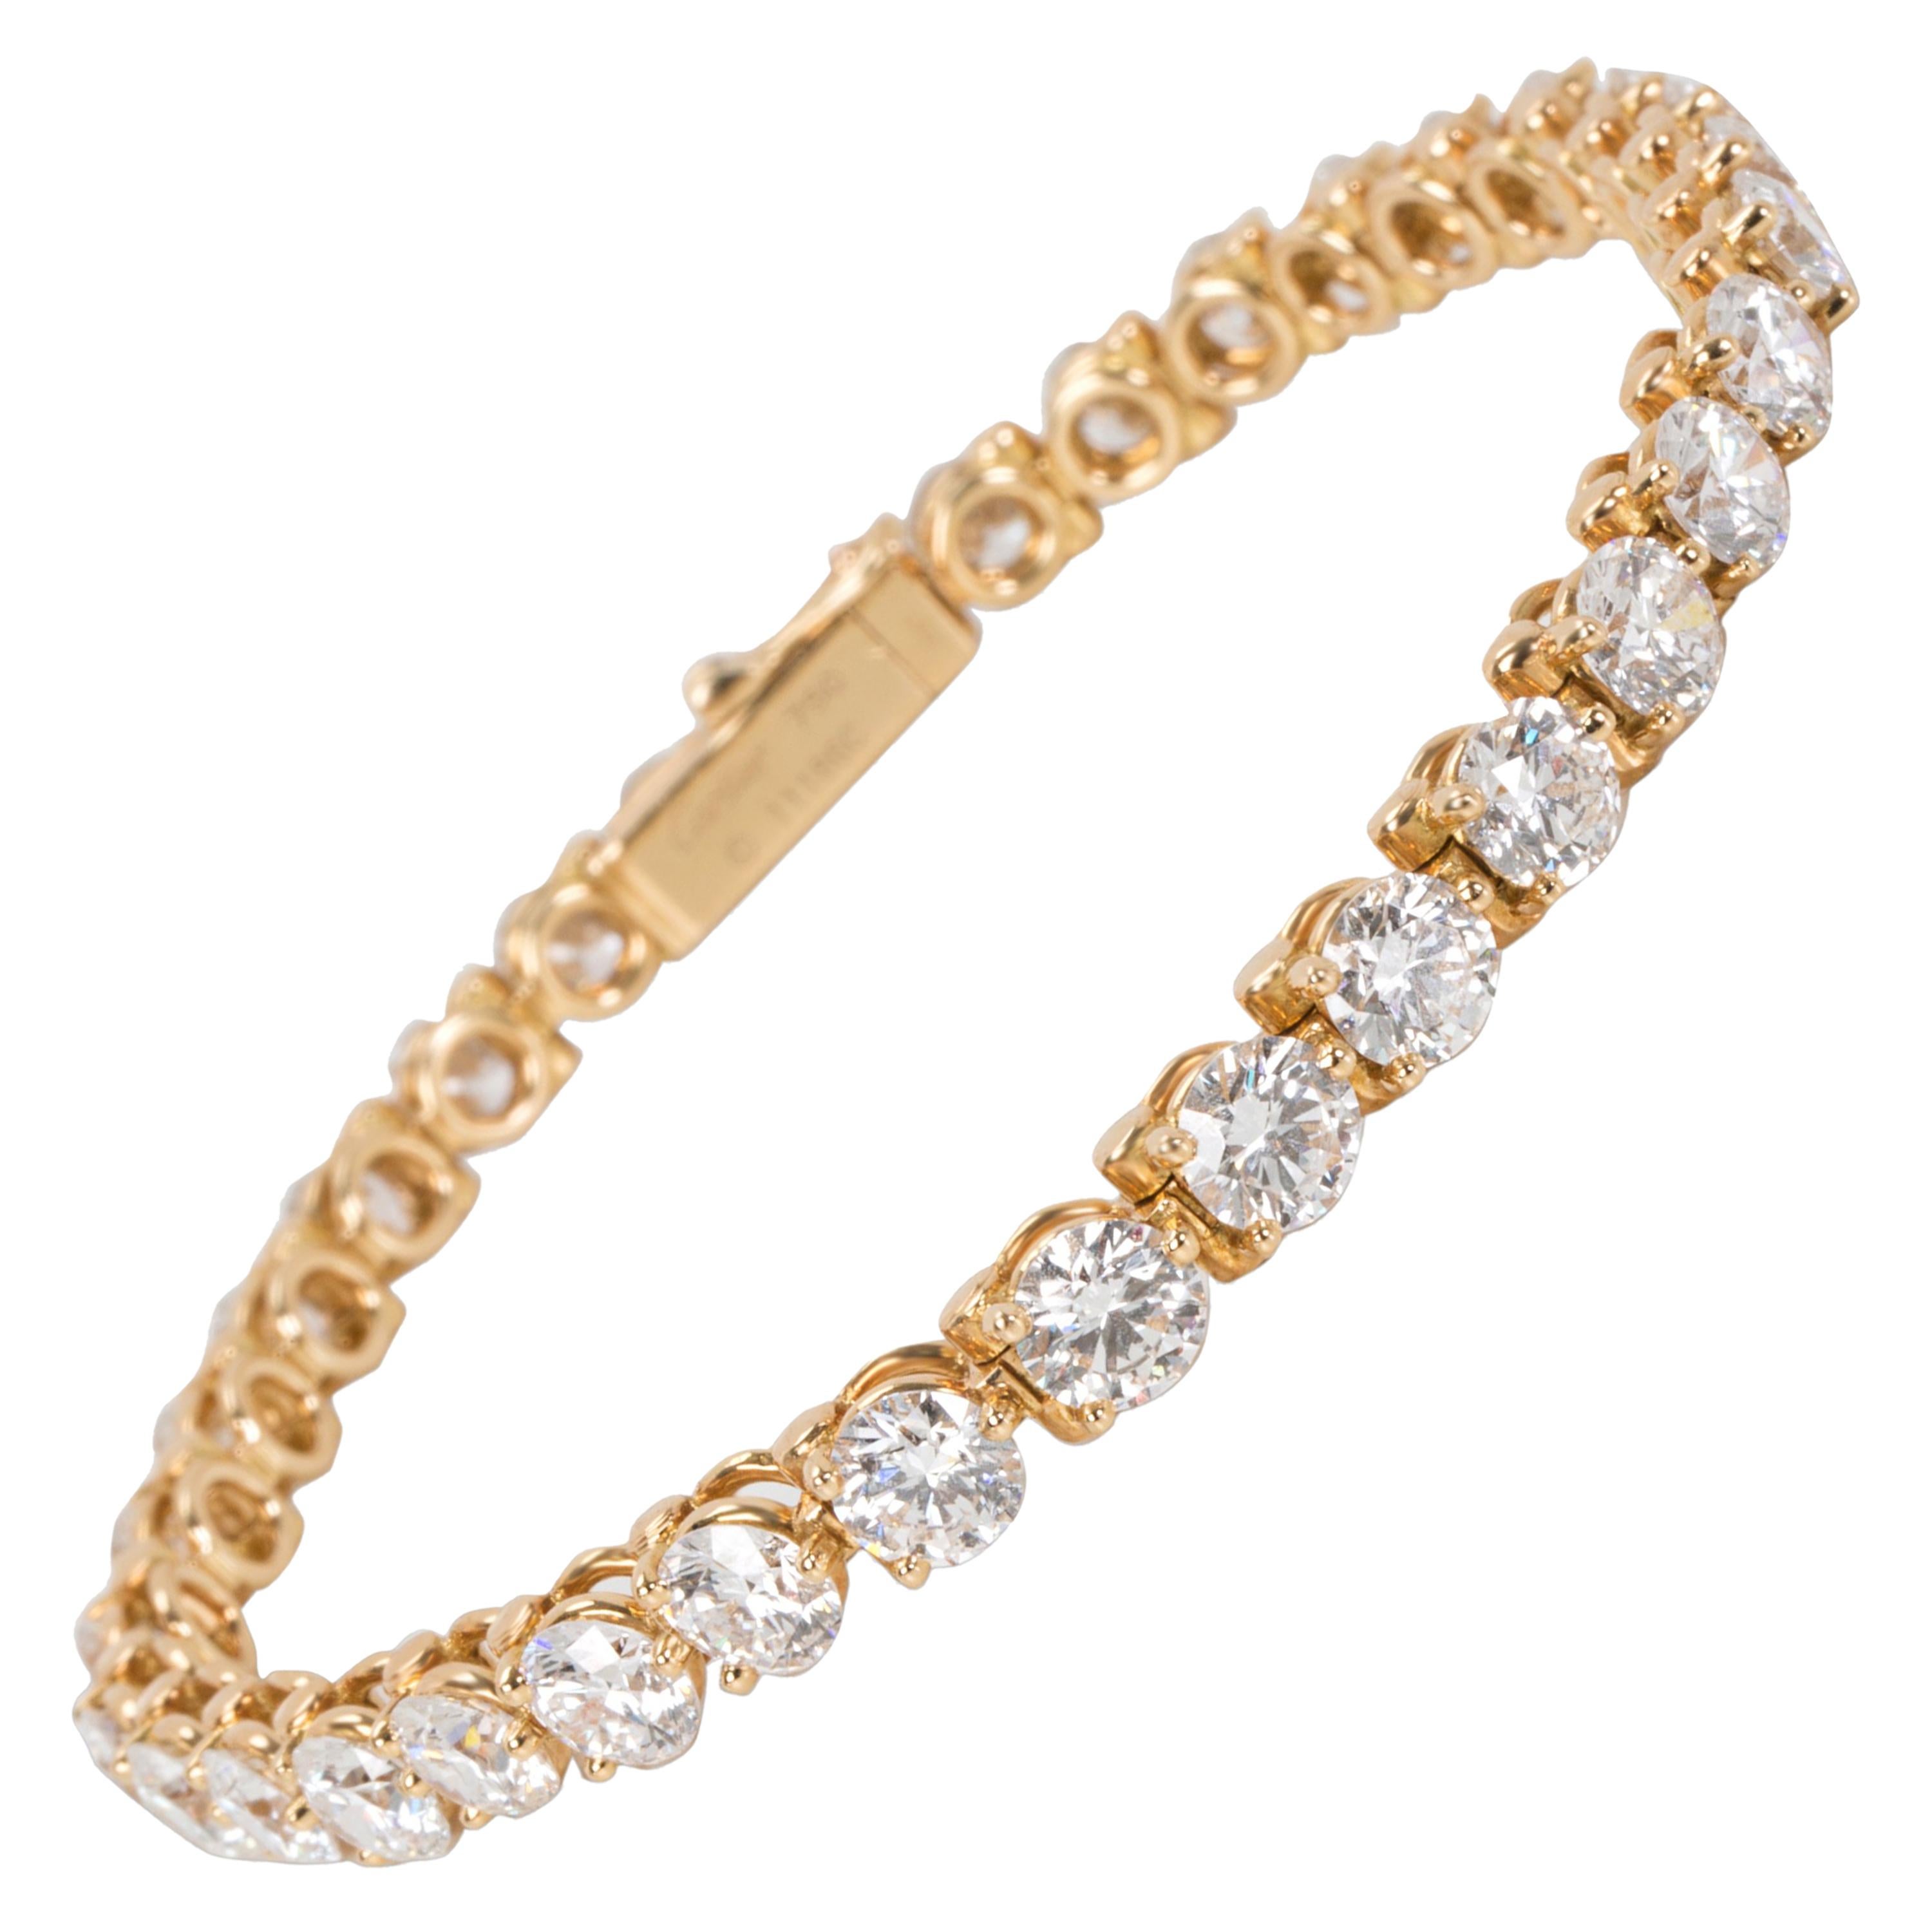 Cartier 3-Prong Diamond Tennis Bracelet in 18 Karat Yellow Gold 9.55 Carat